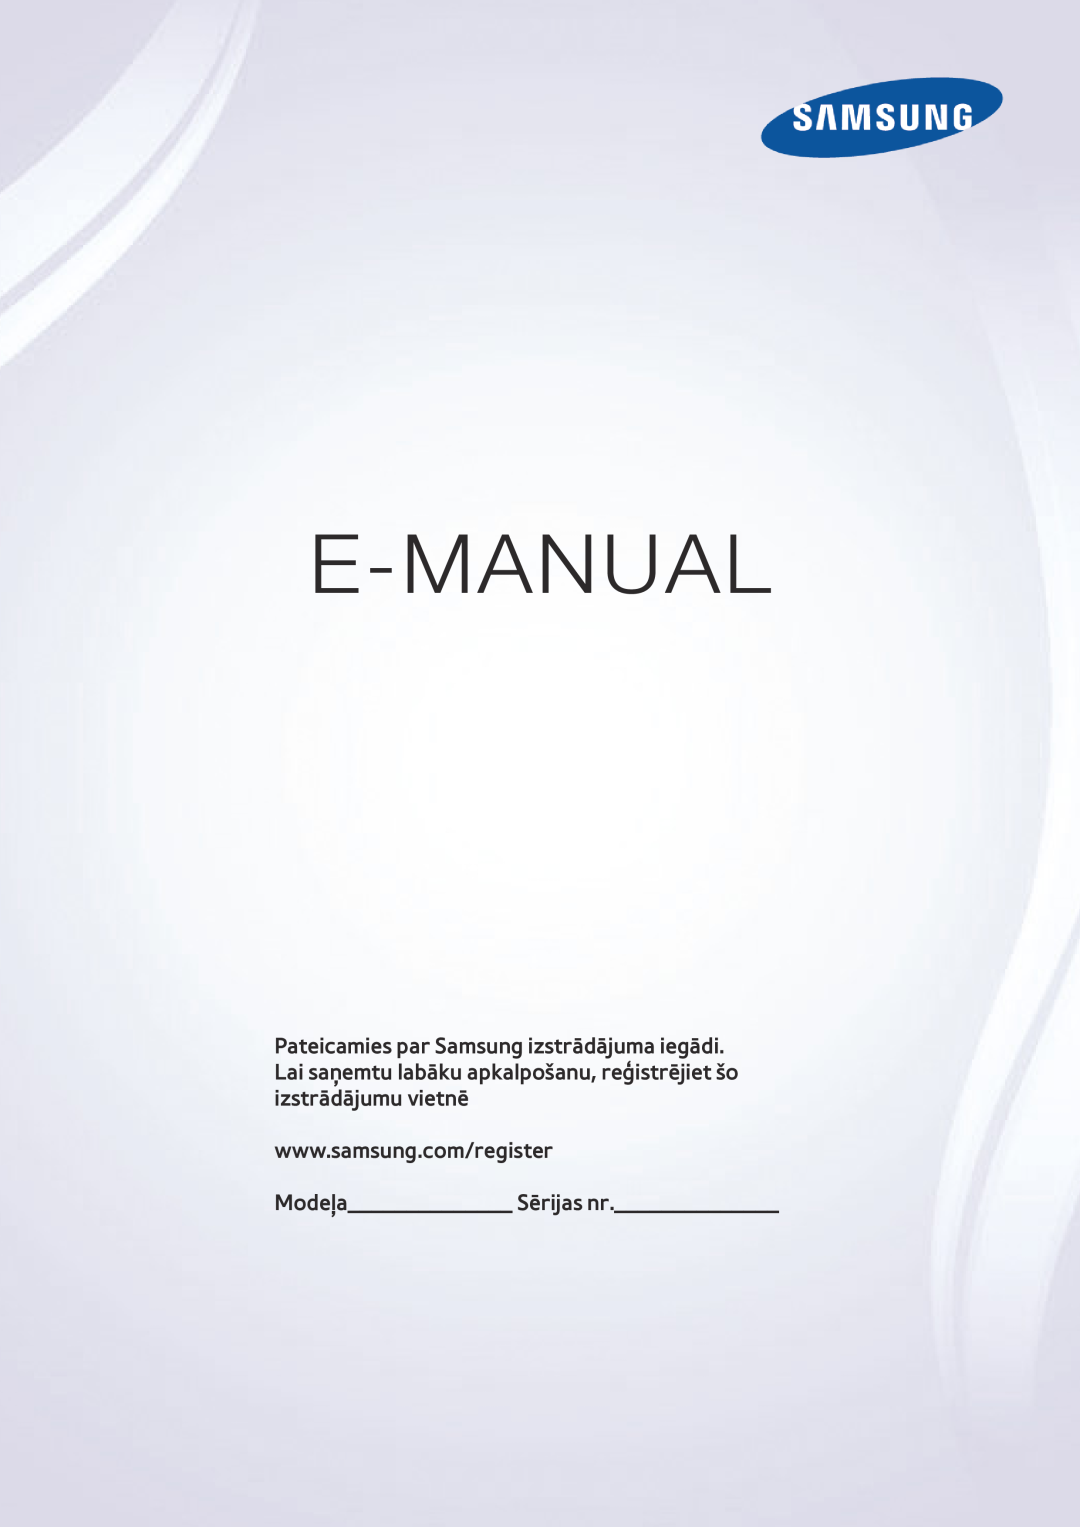 Samsung UE60JU6050UXZG manual EU Declaration of Conformity, Product details, Declaration & Applicable standards 